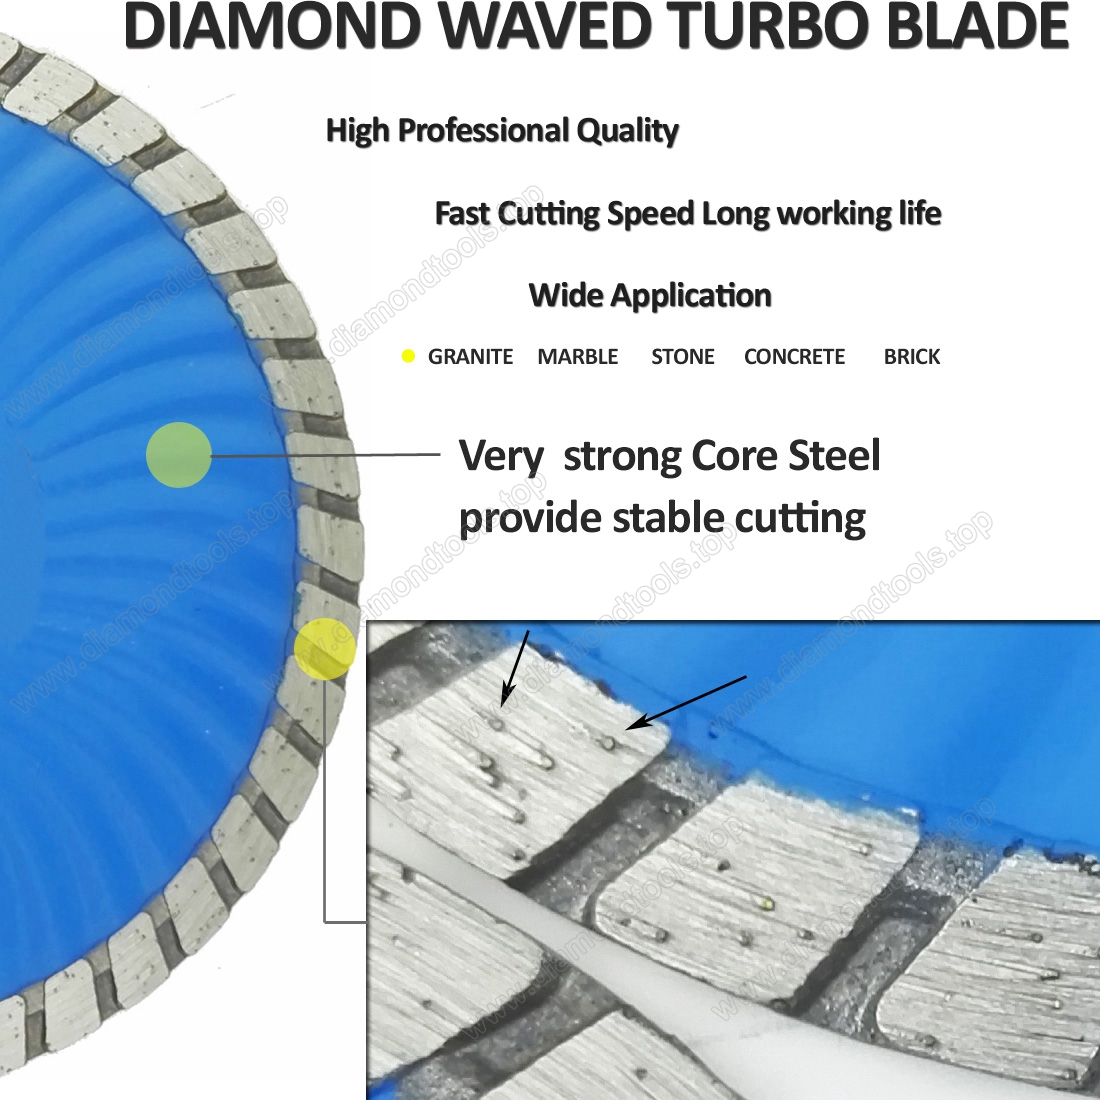 Hot pressed Diamond Waved Turbo Blade Diamond Saw Blade Cutting disc